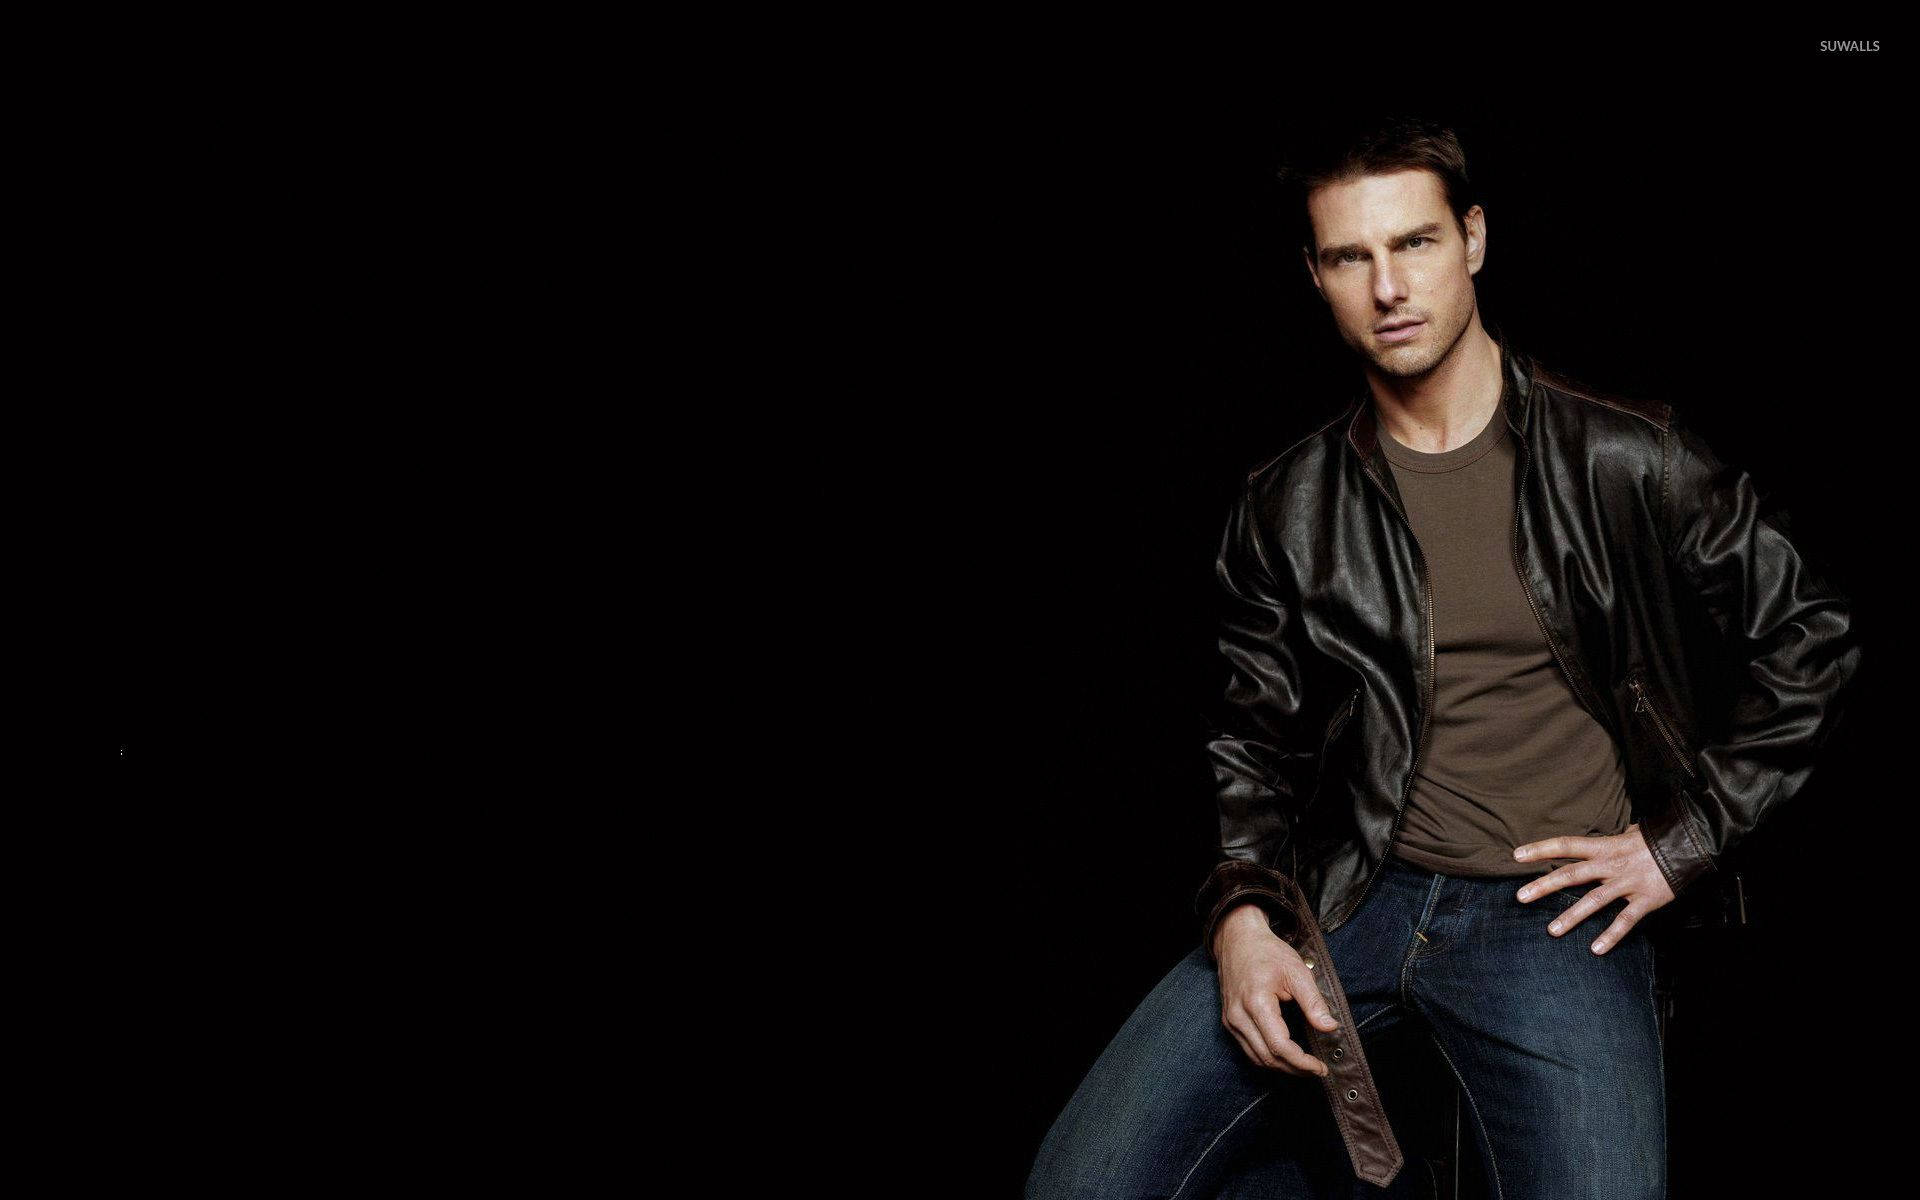 Handsome Tom Cruise